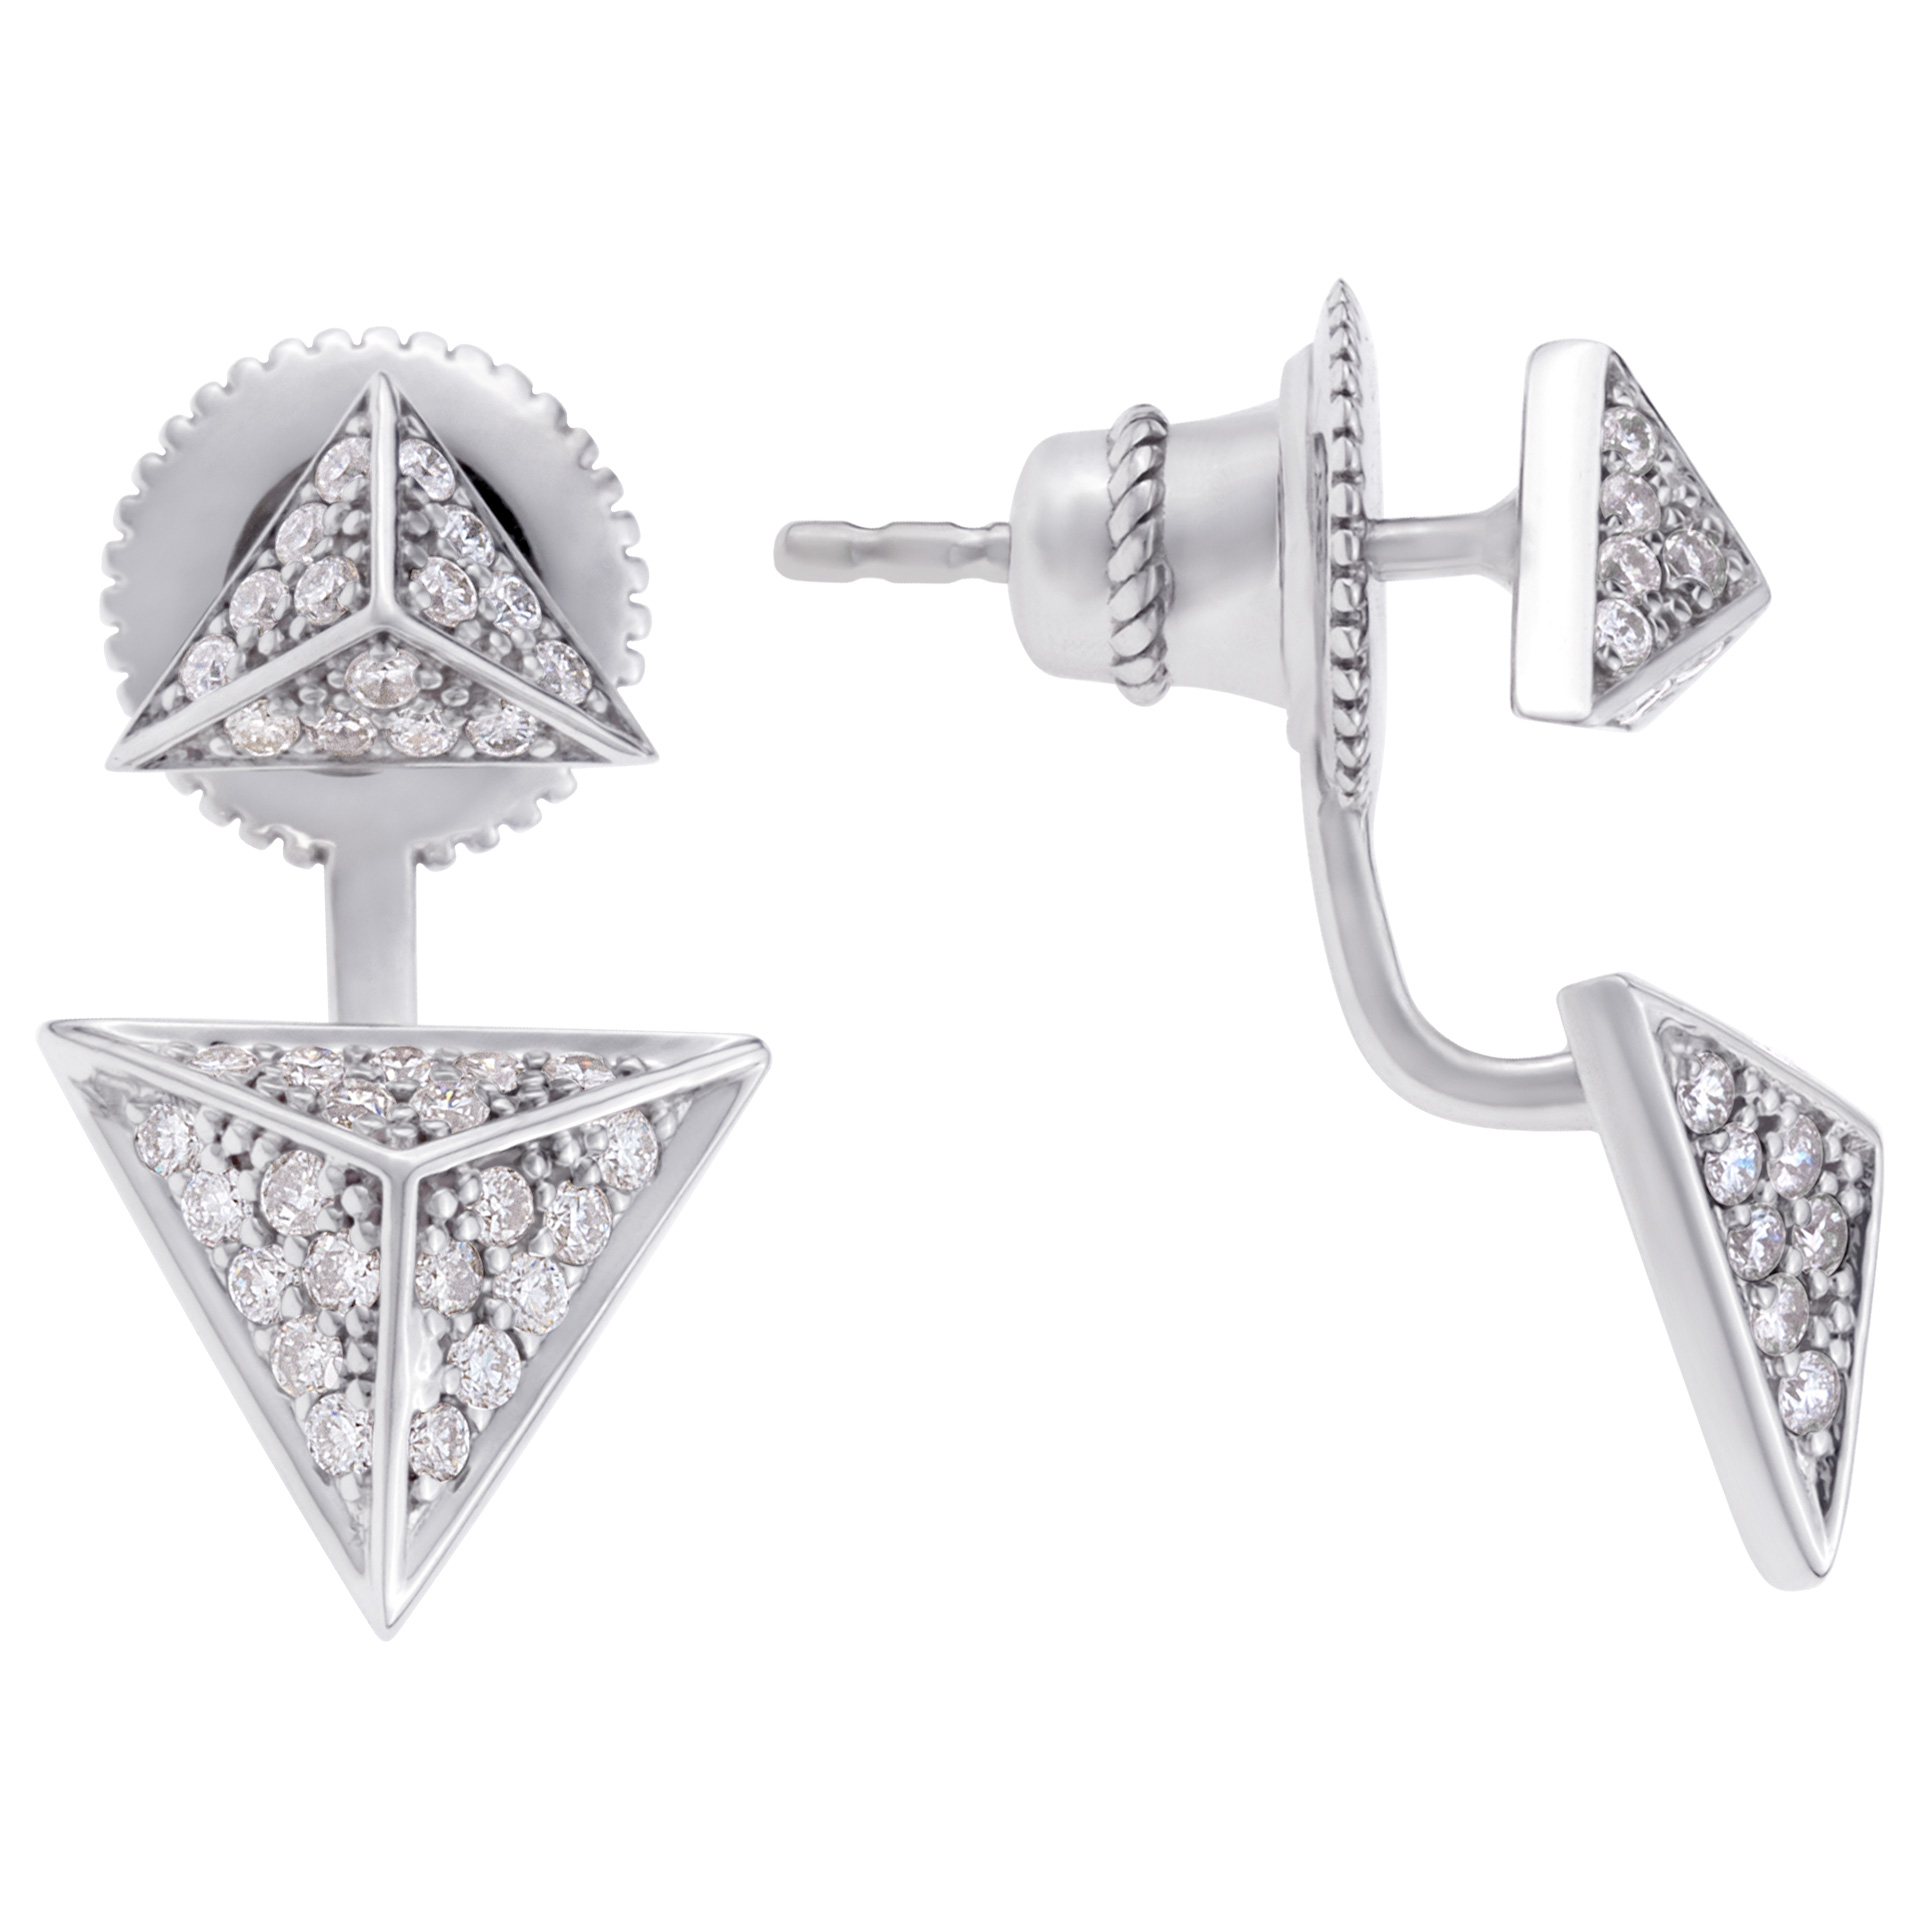 Triangle diamond earrings 18k white gold. 0.48 carats in diamonds image 1